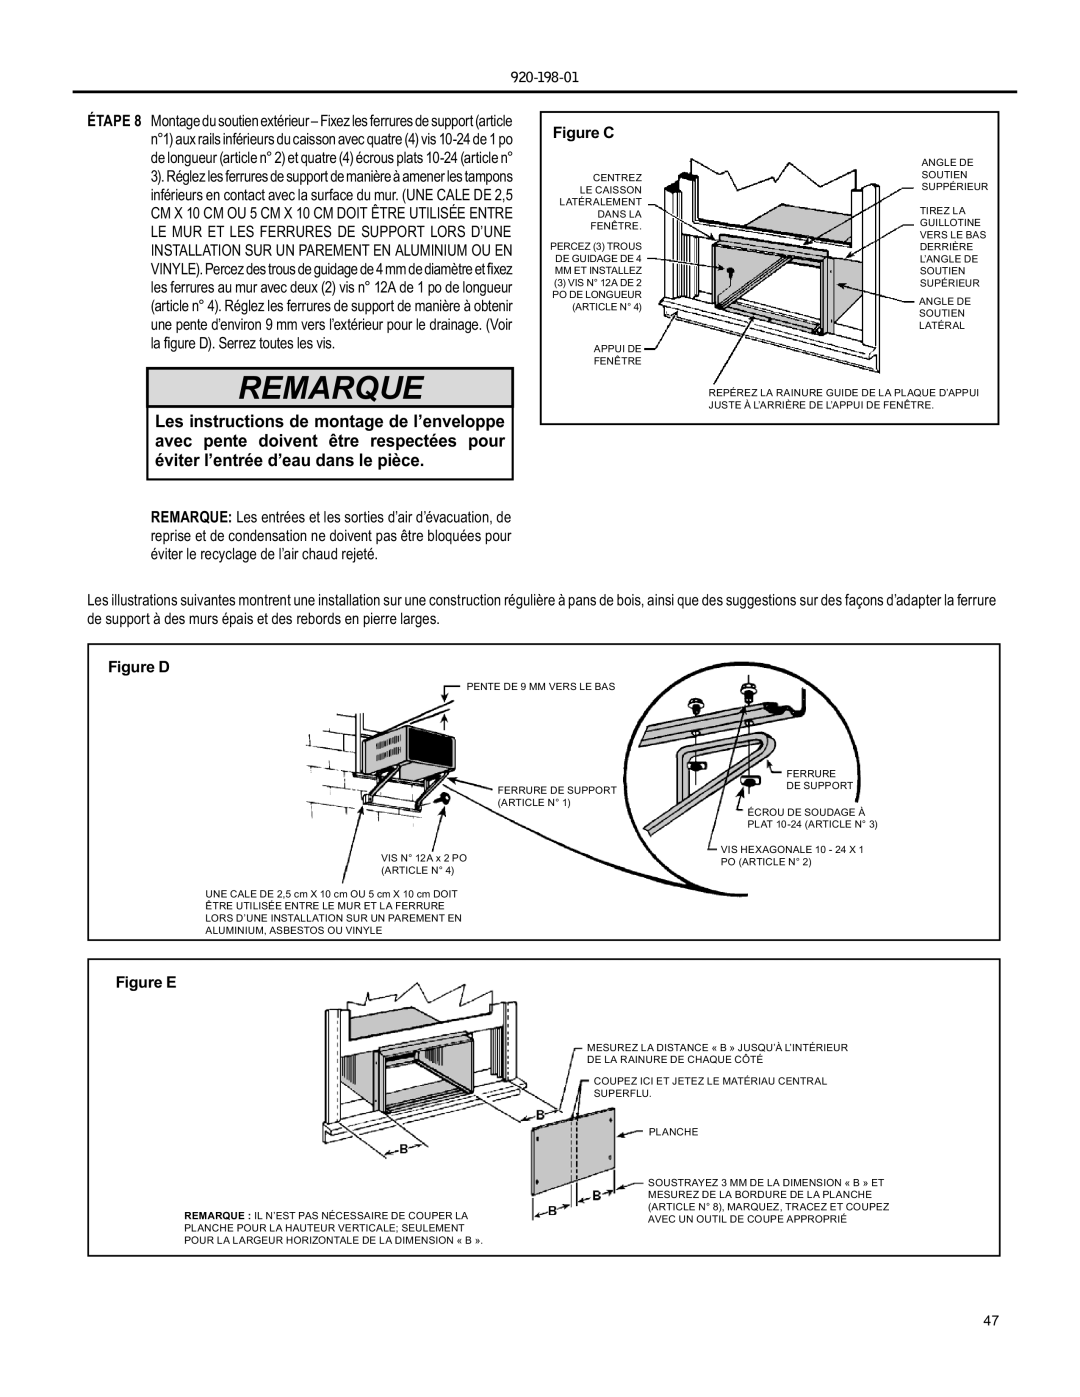 Friedrich YS09 operation manual Remarque, Figure C, Figure D, Figure E 